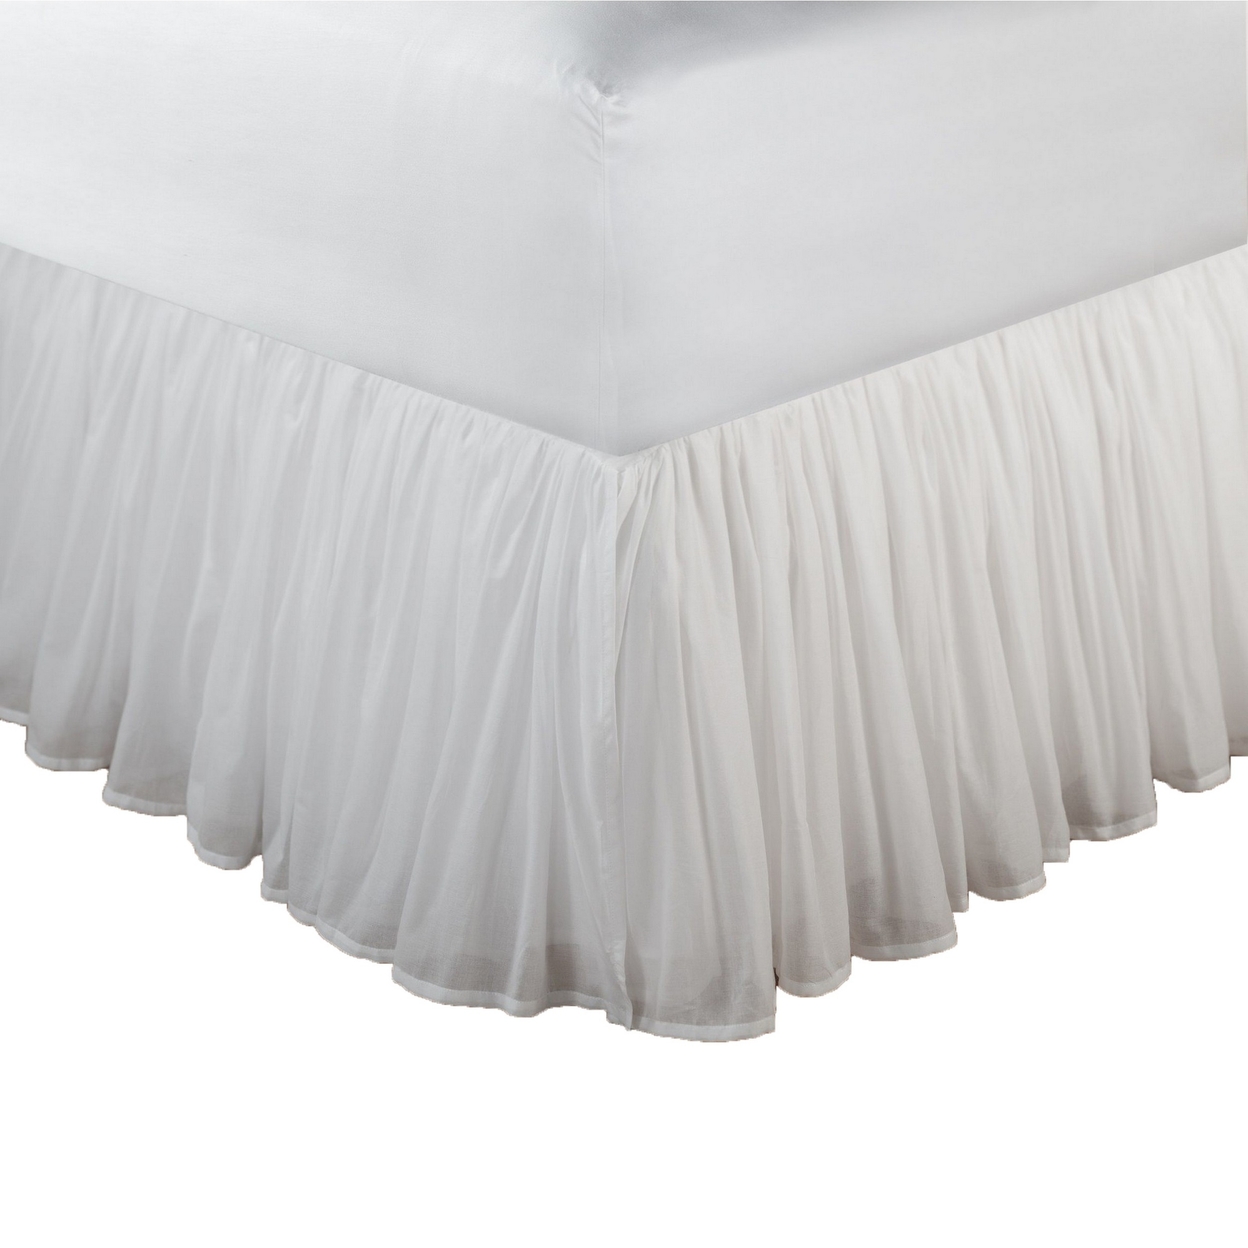 Twin Bed Skirt, Polyester Platform, Cotton Voile Drop, Ruffled Edge, White -Saltoro Sherpi